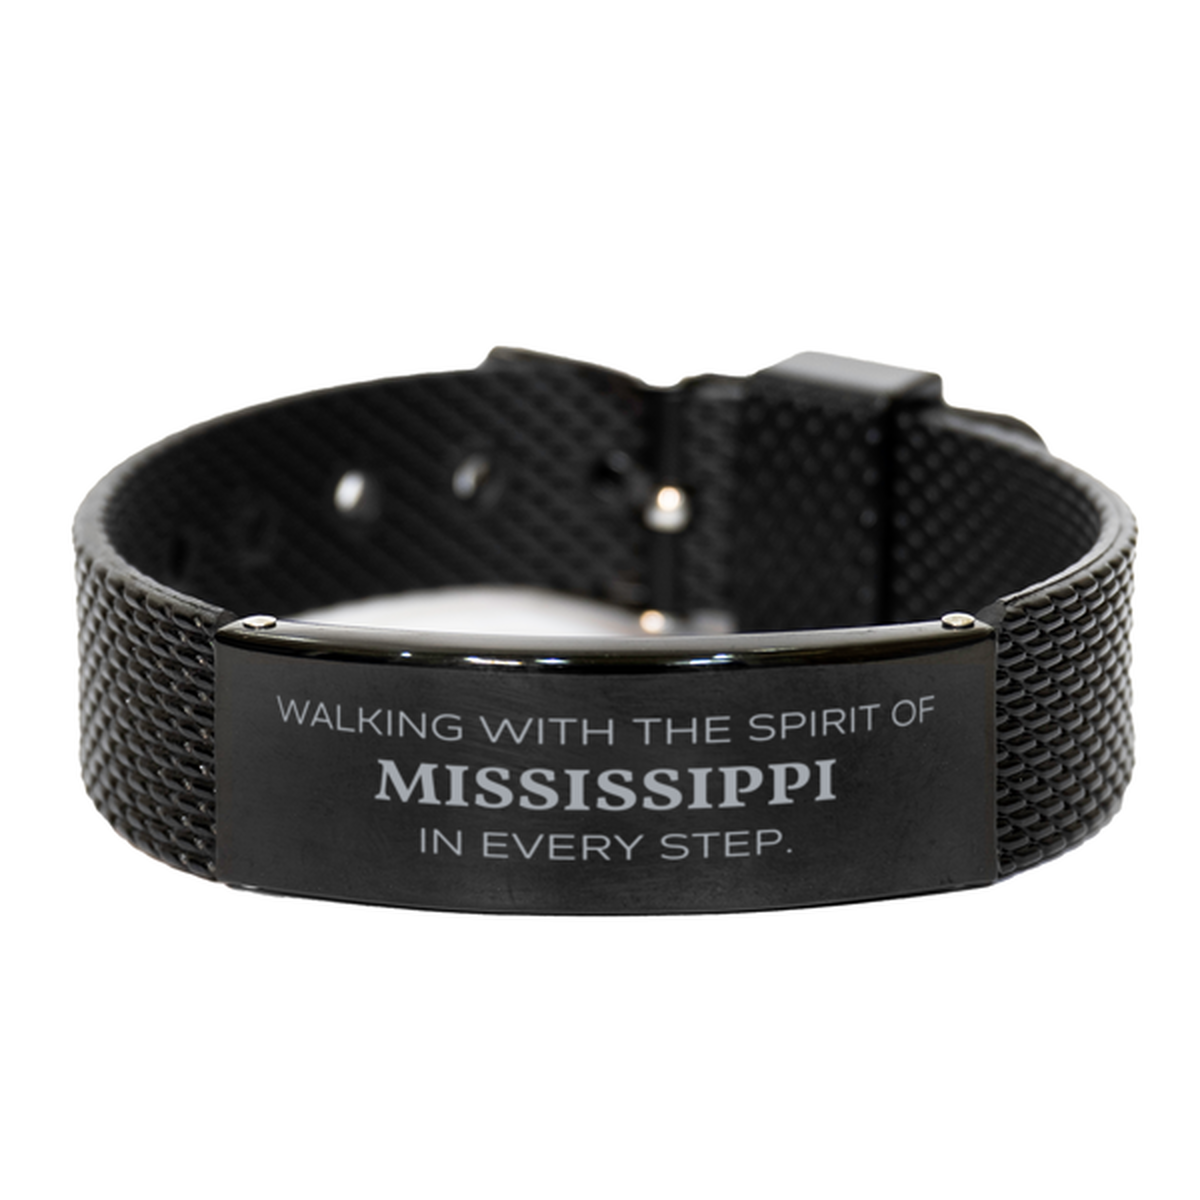 Mississippi Gifts, Walking with the spirit, Love Mississippi Birthday Christmas Black Shark Mesh Bracelet For Mississippi People, Men, Women, Friends